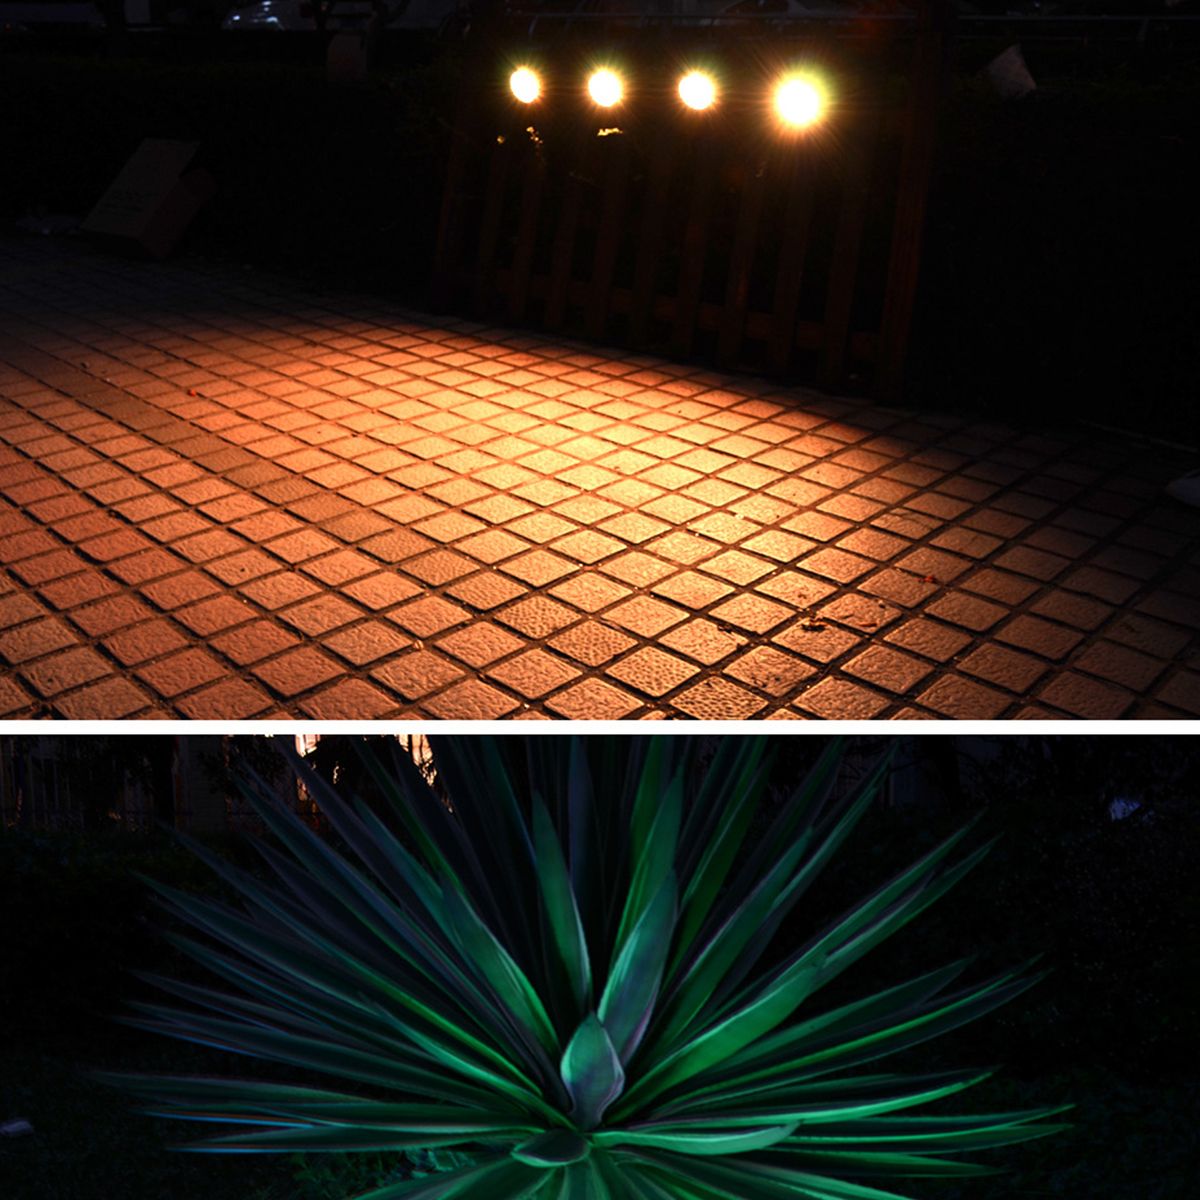 Solar-Garden-Light-Spot-Outdoor-9-LED-Garden-Lawn-Landscape-Path-Wall-Lamp-Waterproof-for-Home-Garde-1722732